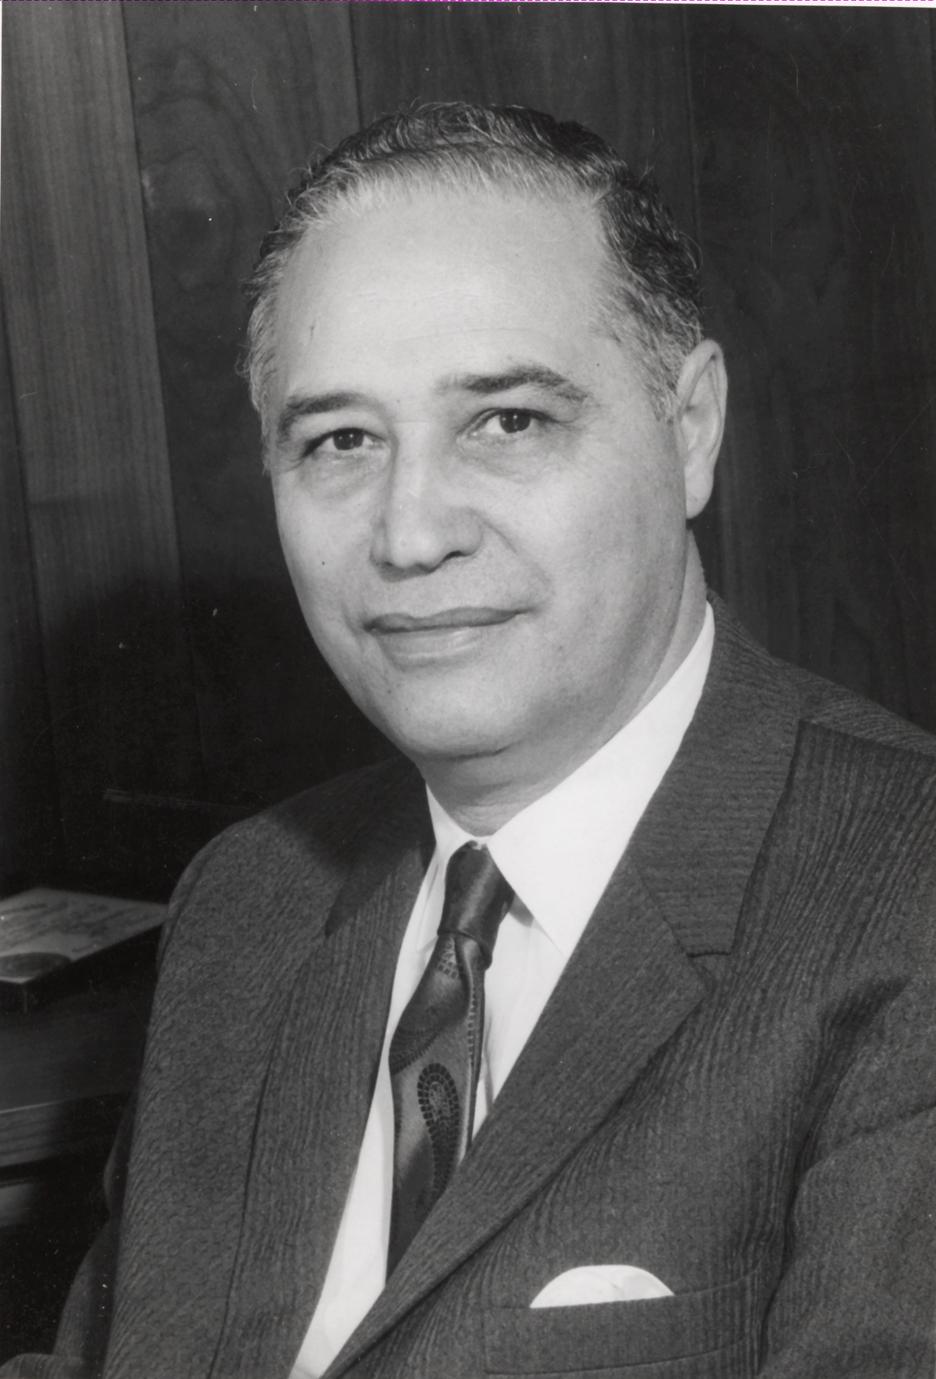 Anthony R. Curreri